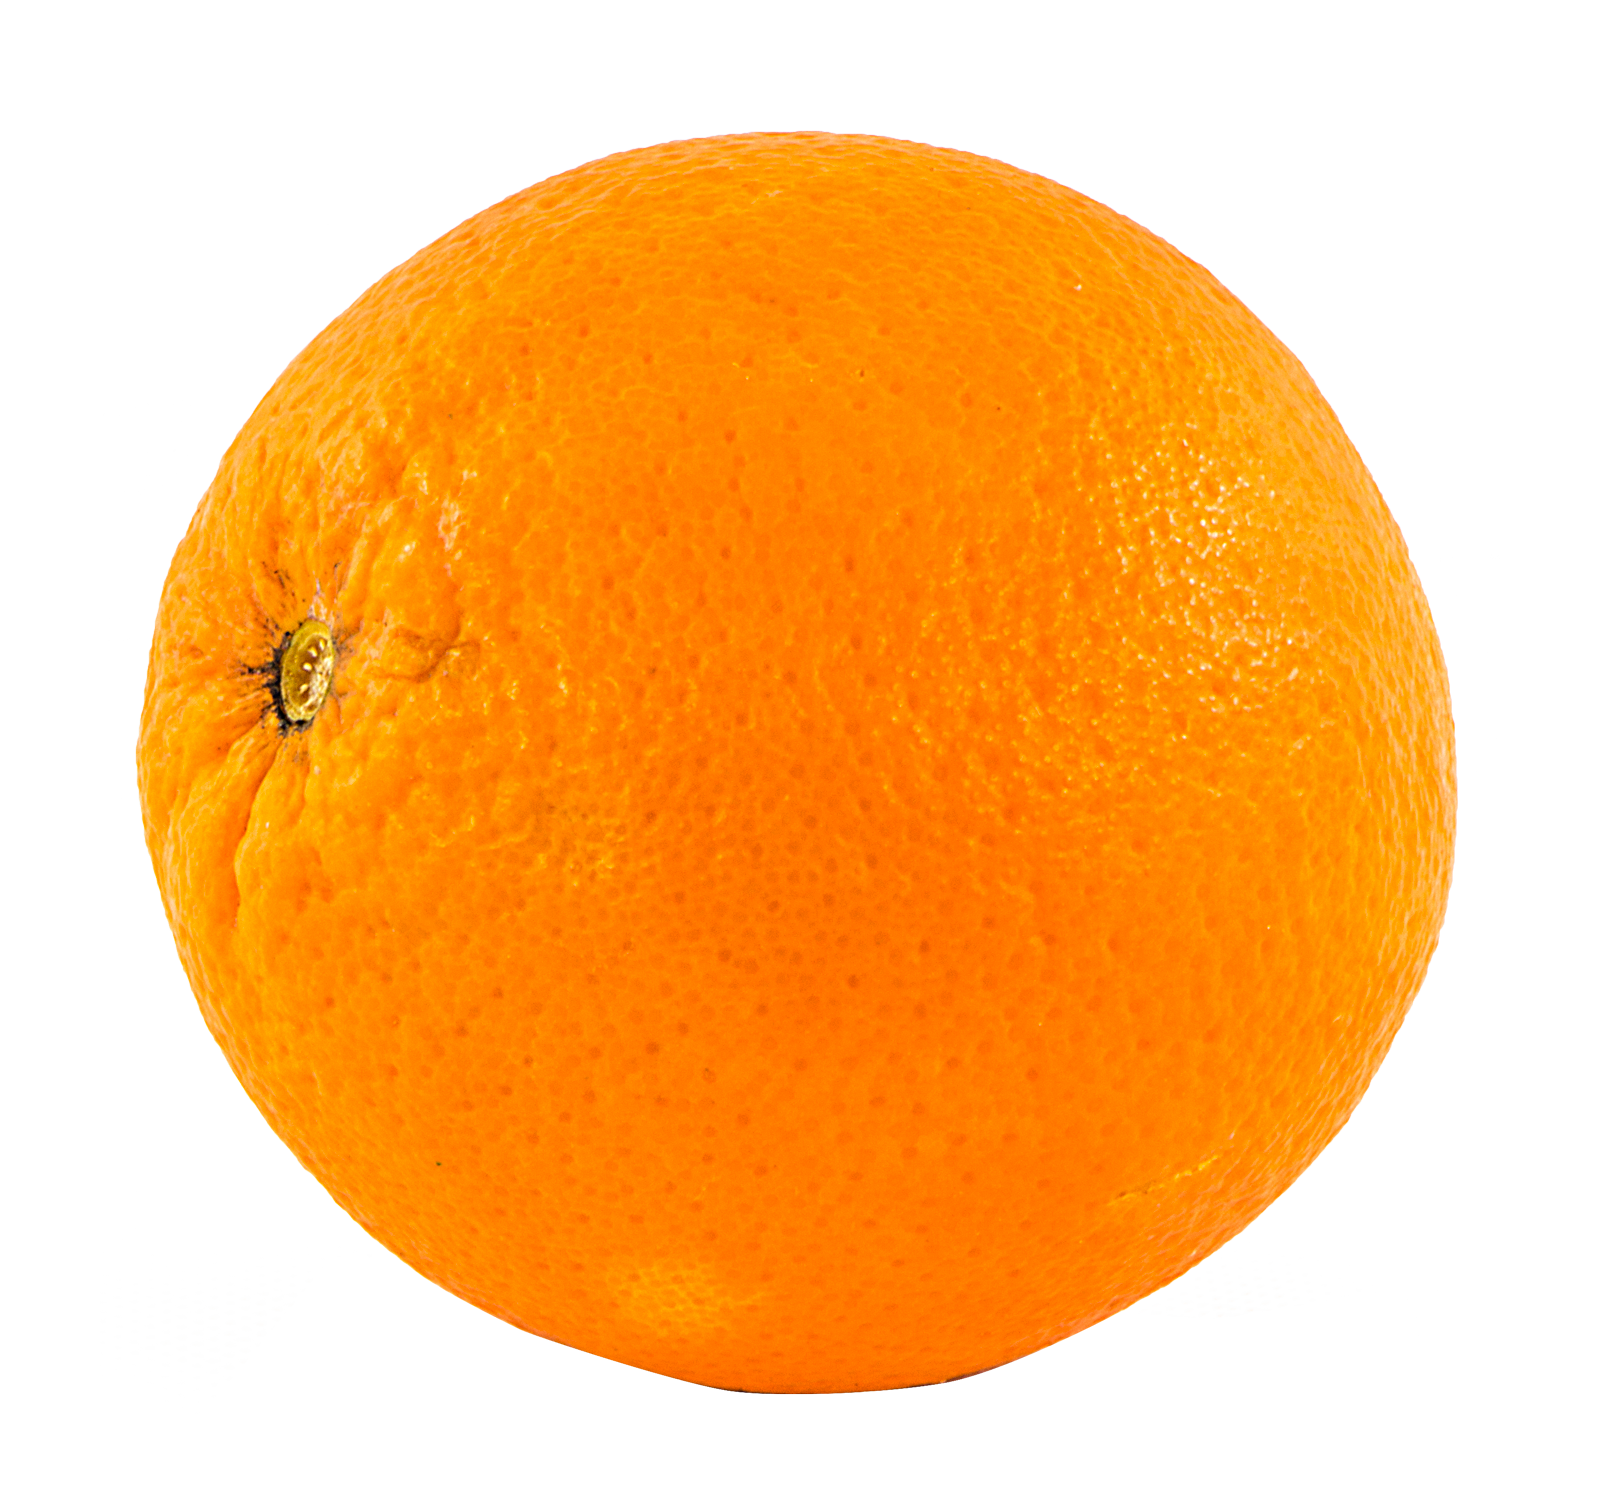 Orange Png Image For Free Download